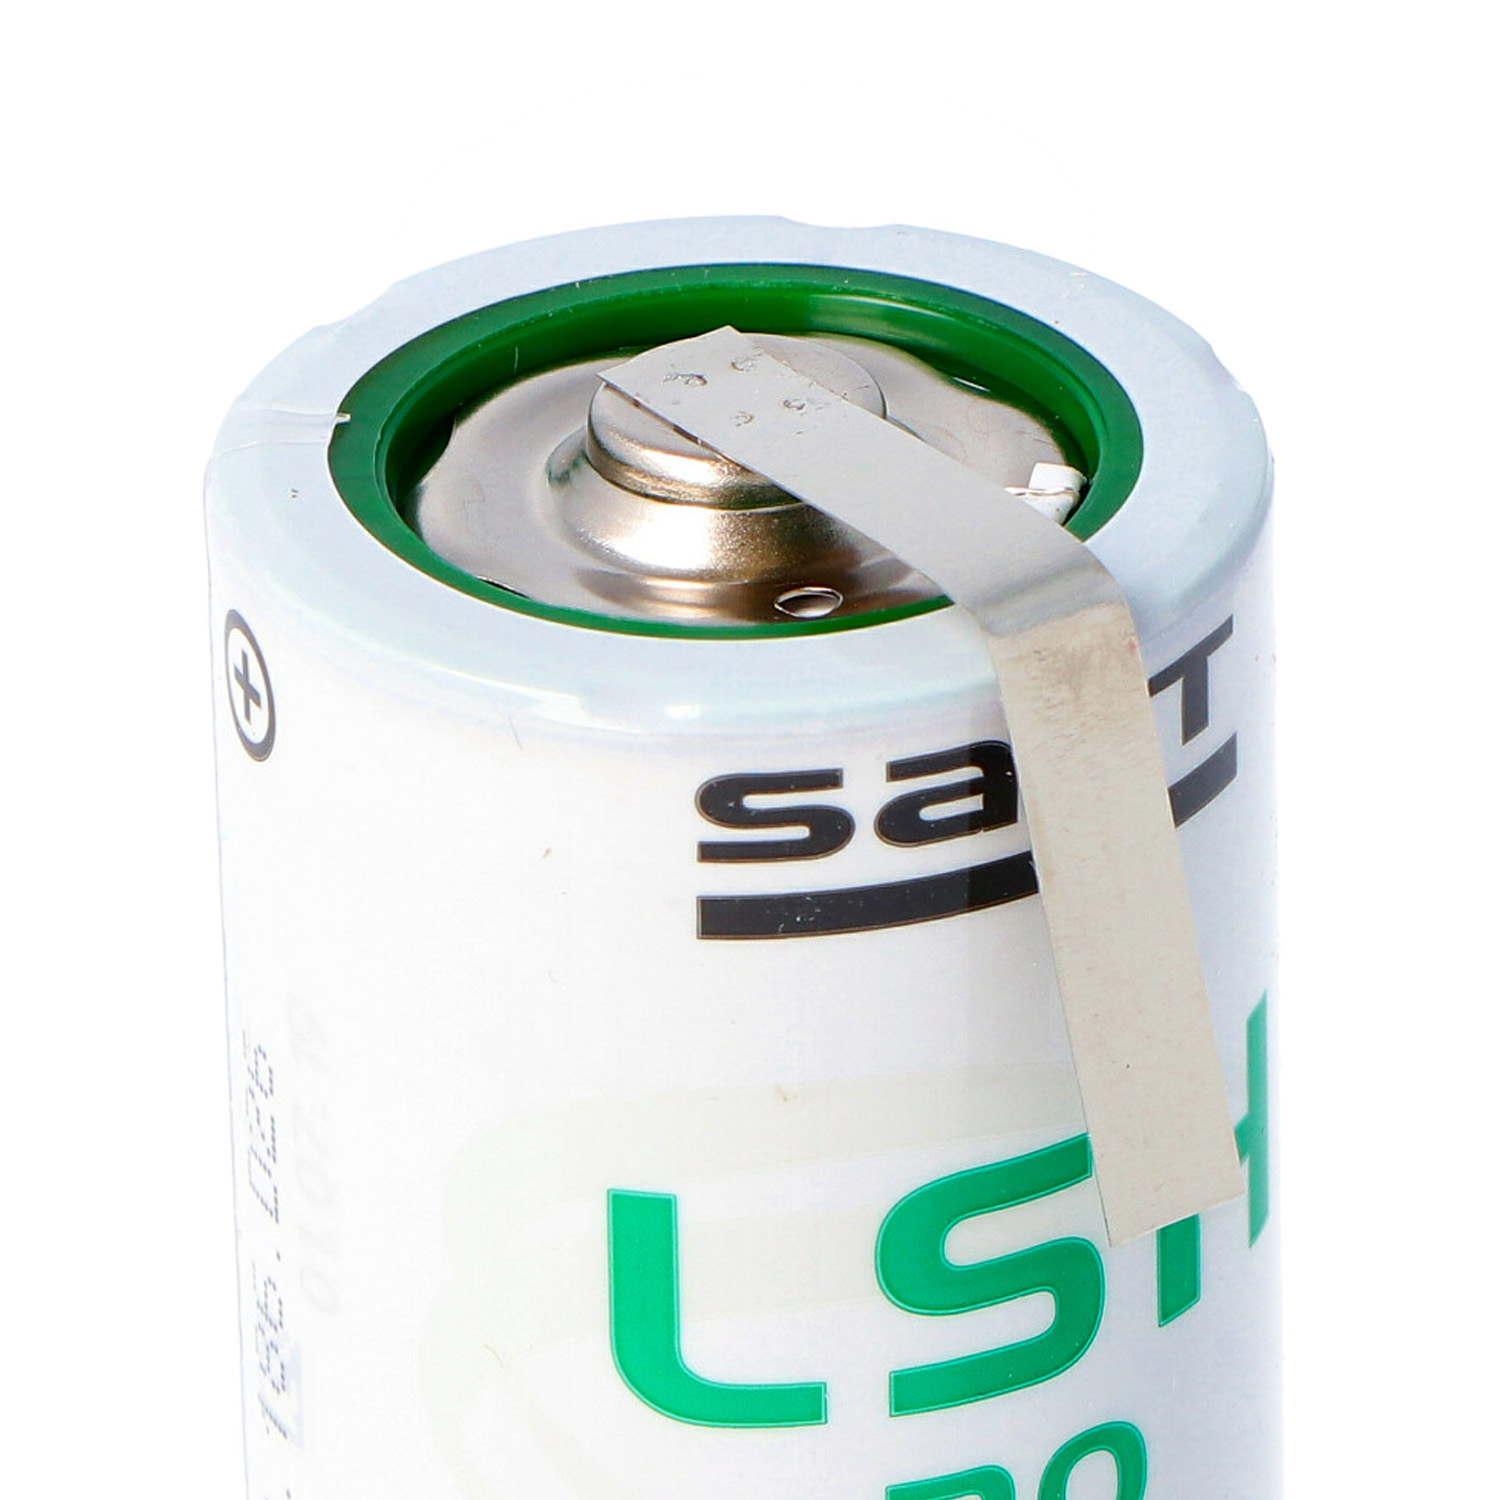 SAFT LSH 20 Lithium Batterie 3.6V Primary LSH20 mit U-Lötfahnen